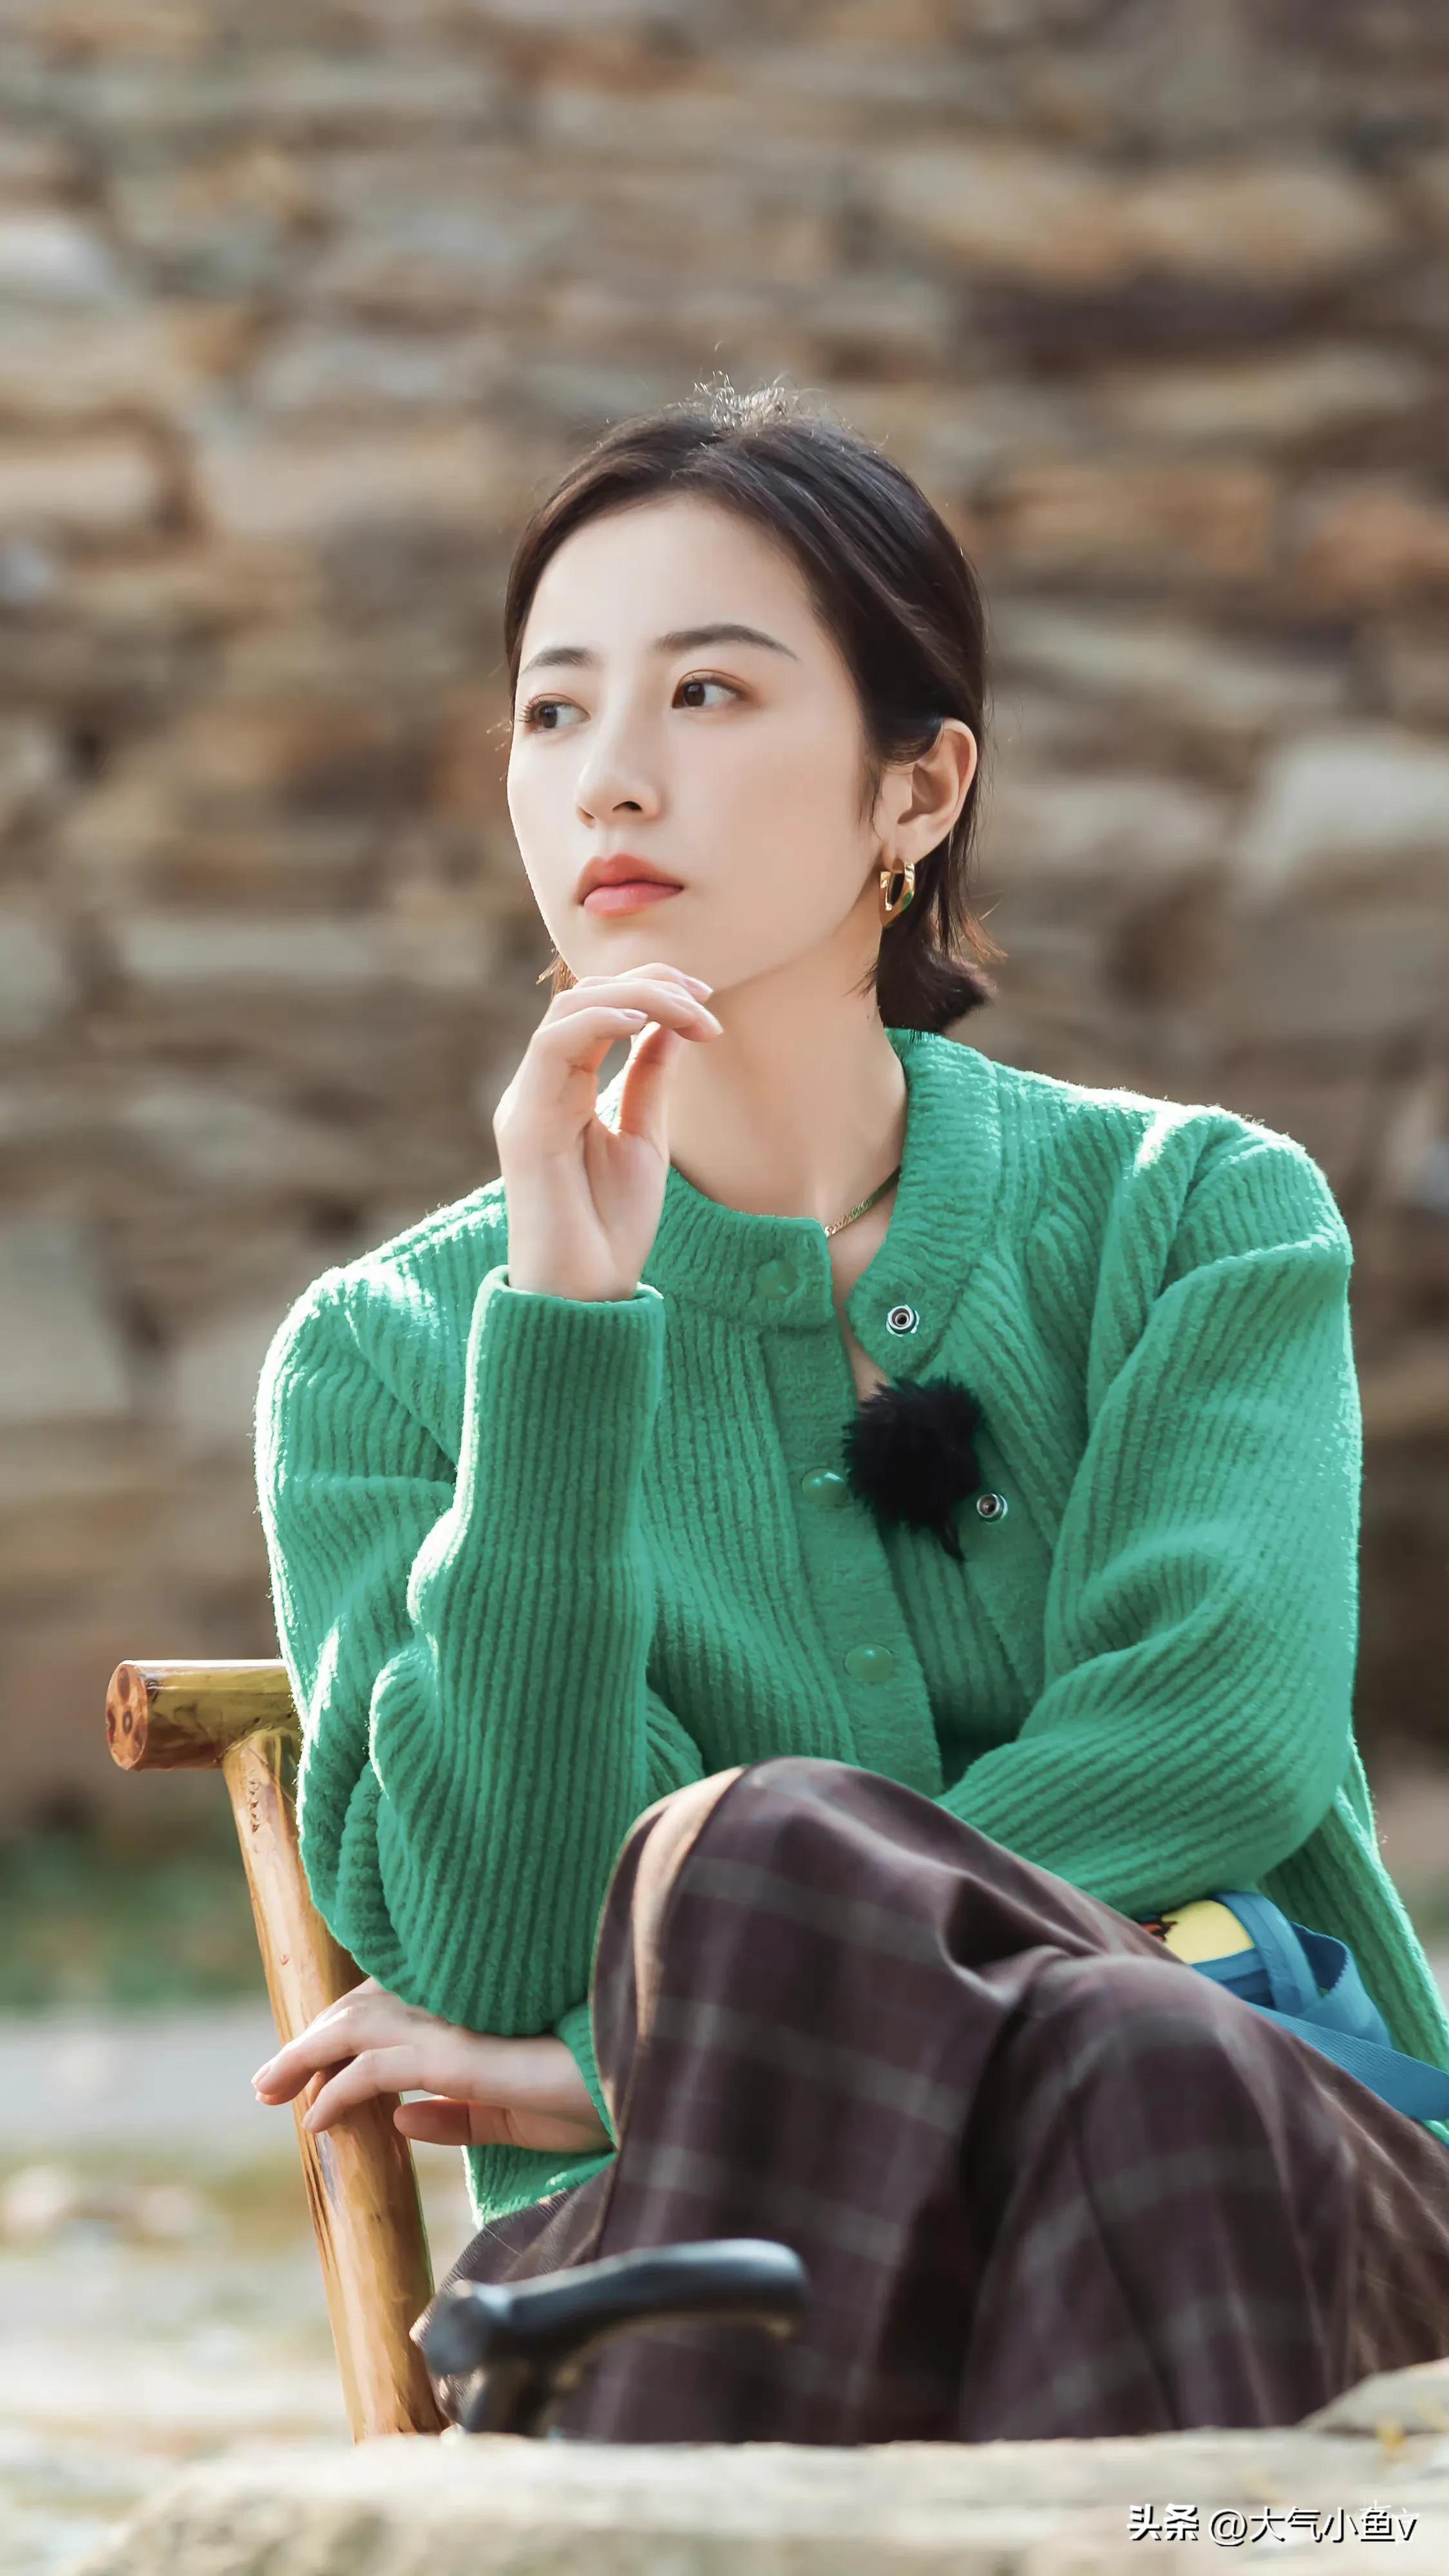 Give everyone Amway, the goddess of online drama Zhou Yutong - iNEWS